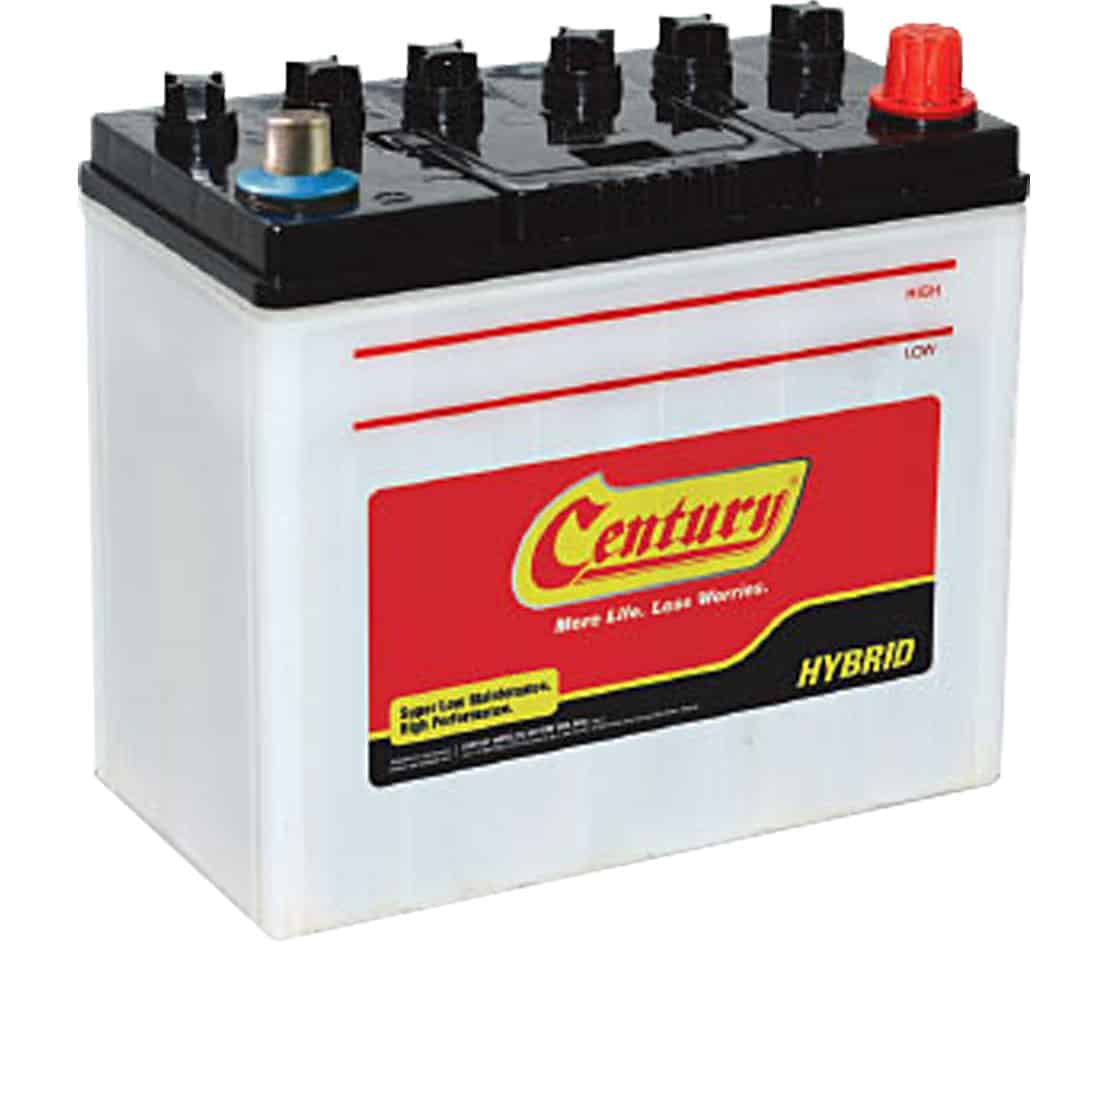 Century Hybrid Battery